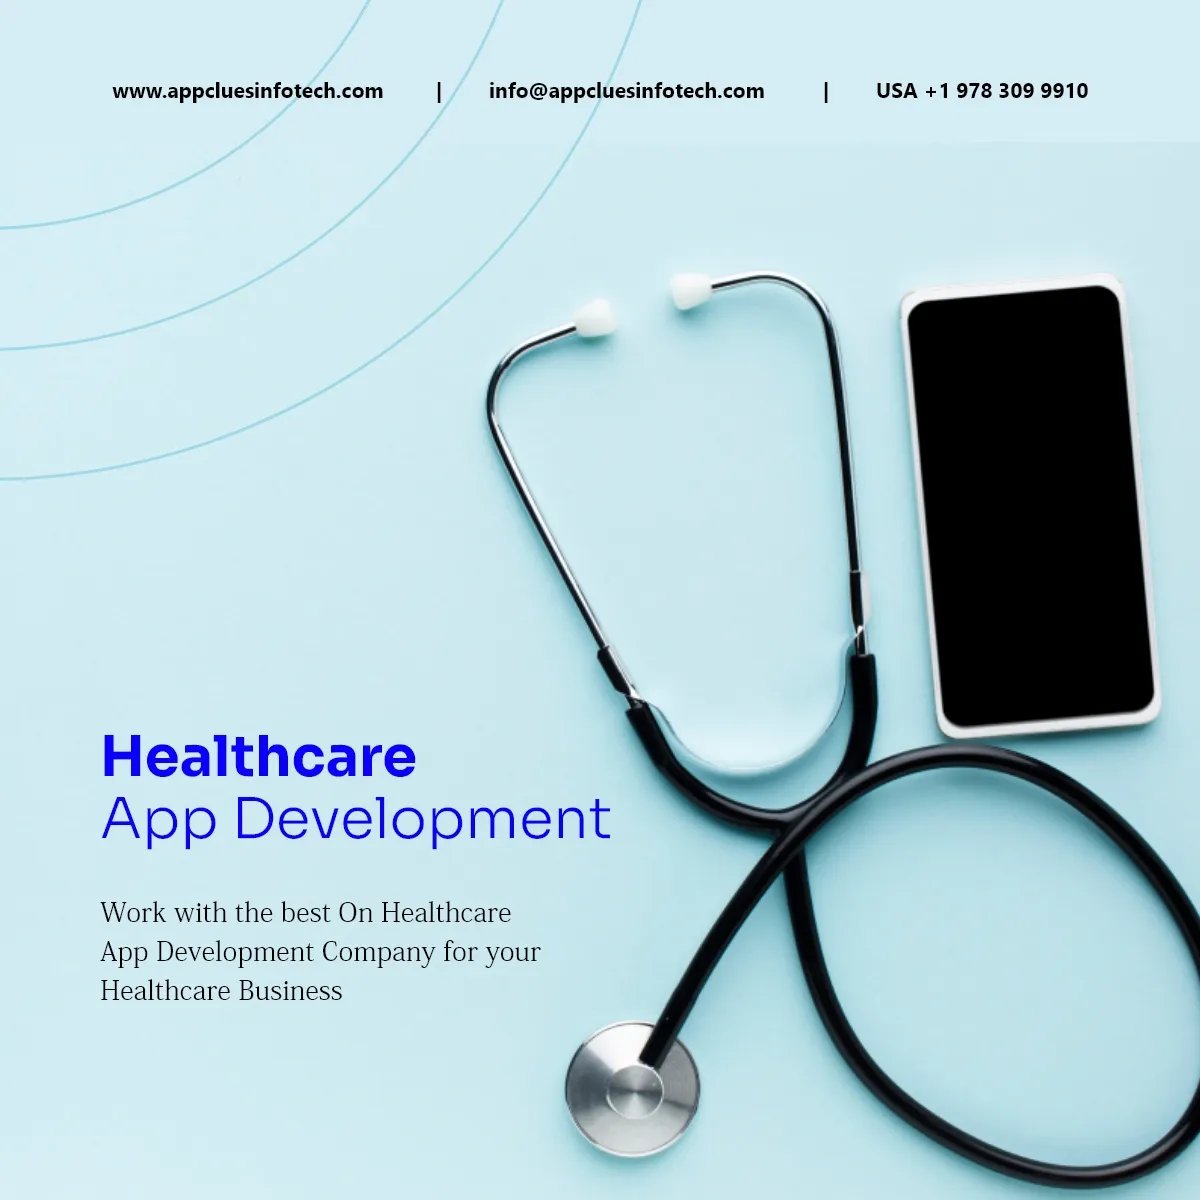 Top Healthcare App Development Company in USA